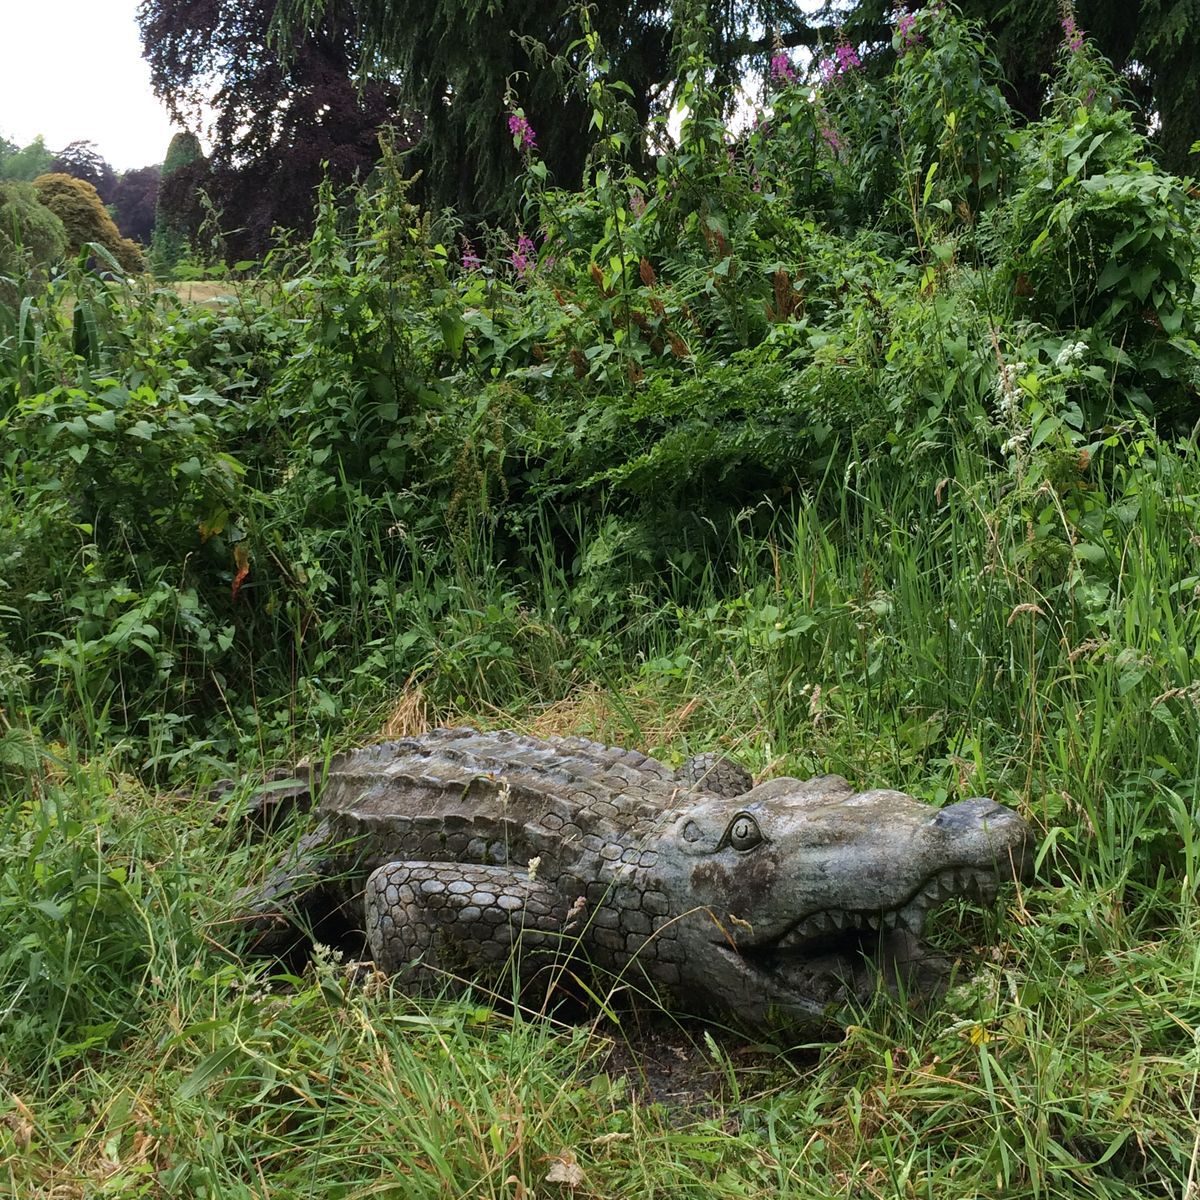 Pgds 20140802 160340 Crocodile Sculpture By Lake